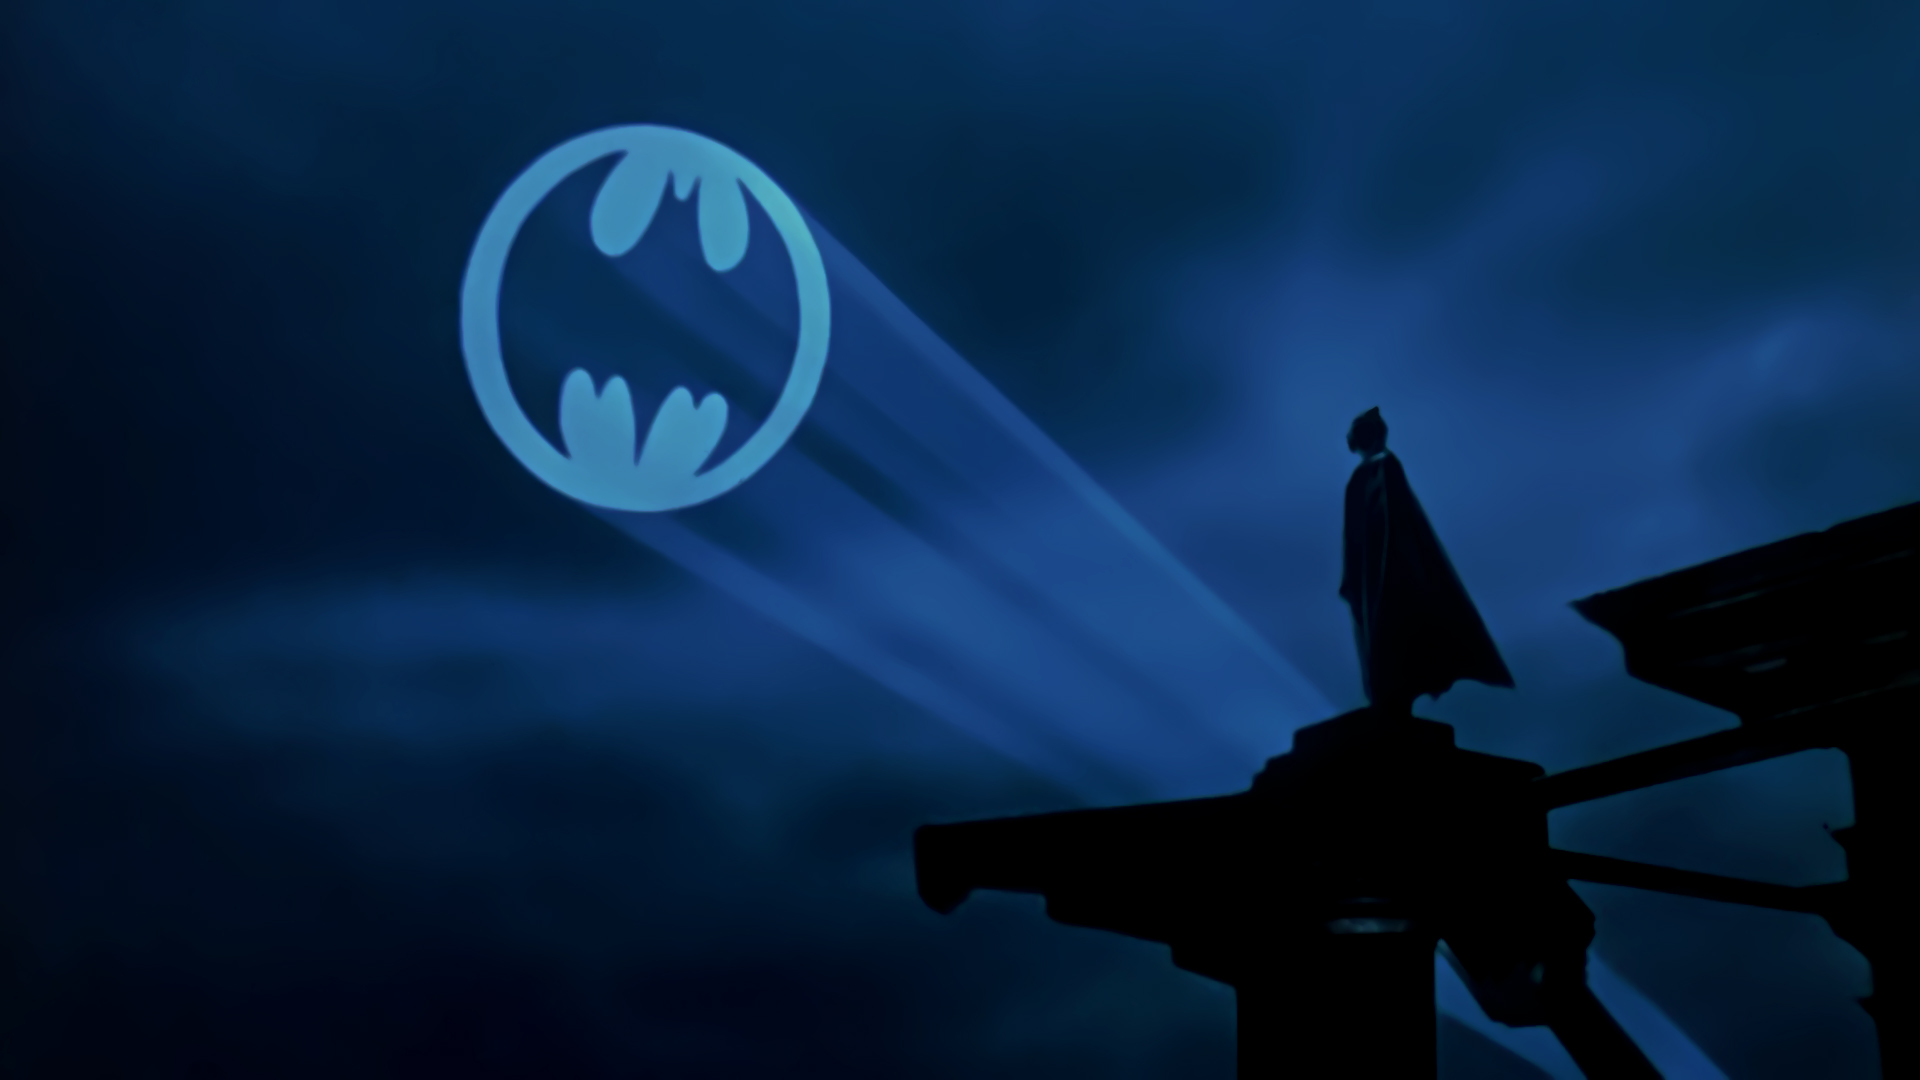 Batman Bats in Night City Desktop Wallpaper - Batman Wallpaper 4k